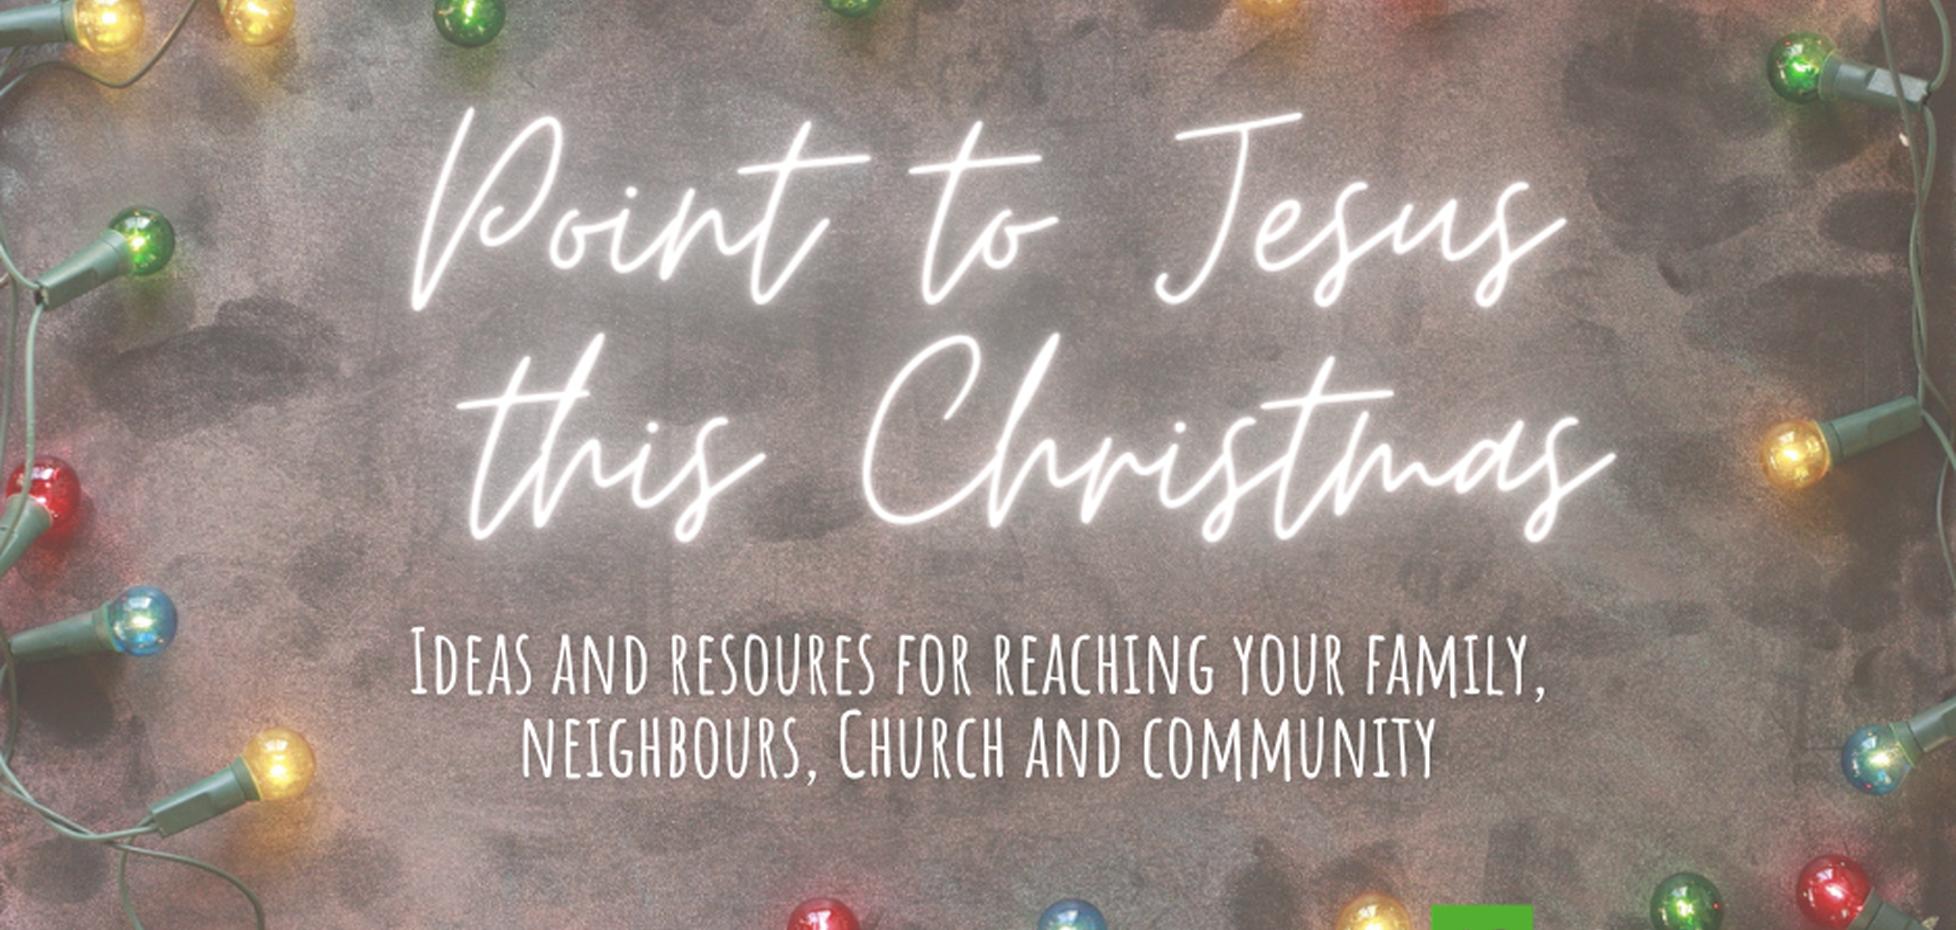 Point to Jesus this Christmas